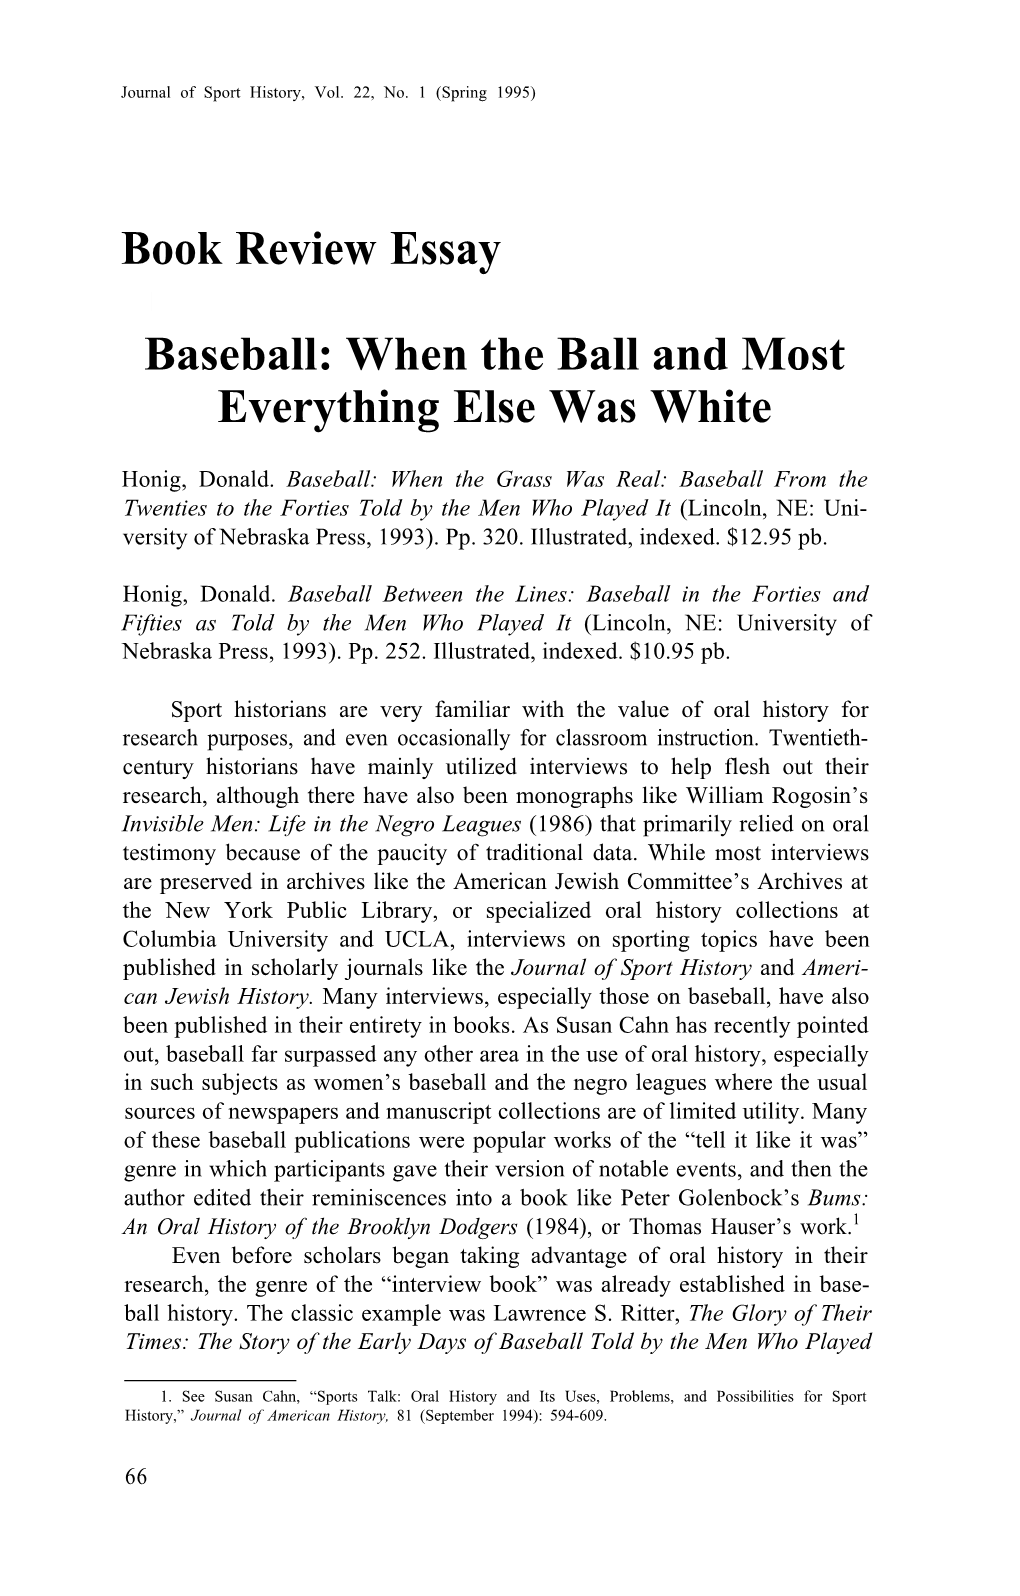 Book Review Essay Baseball